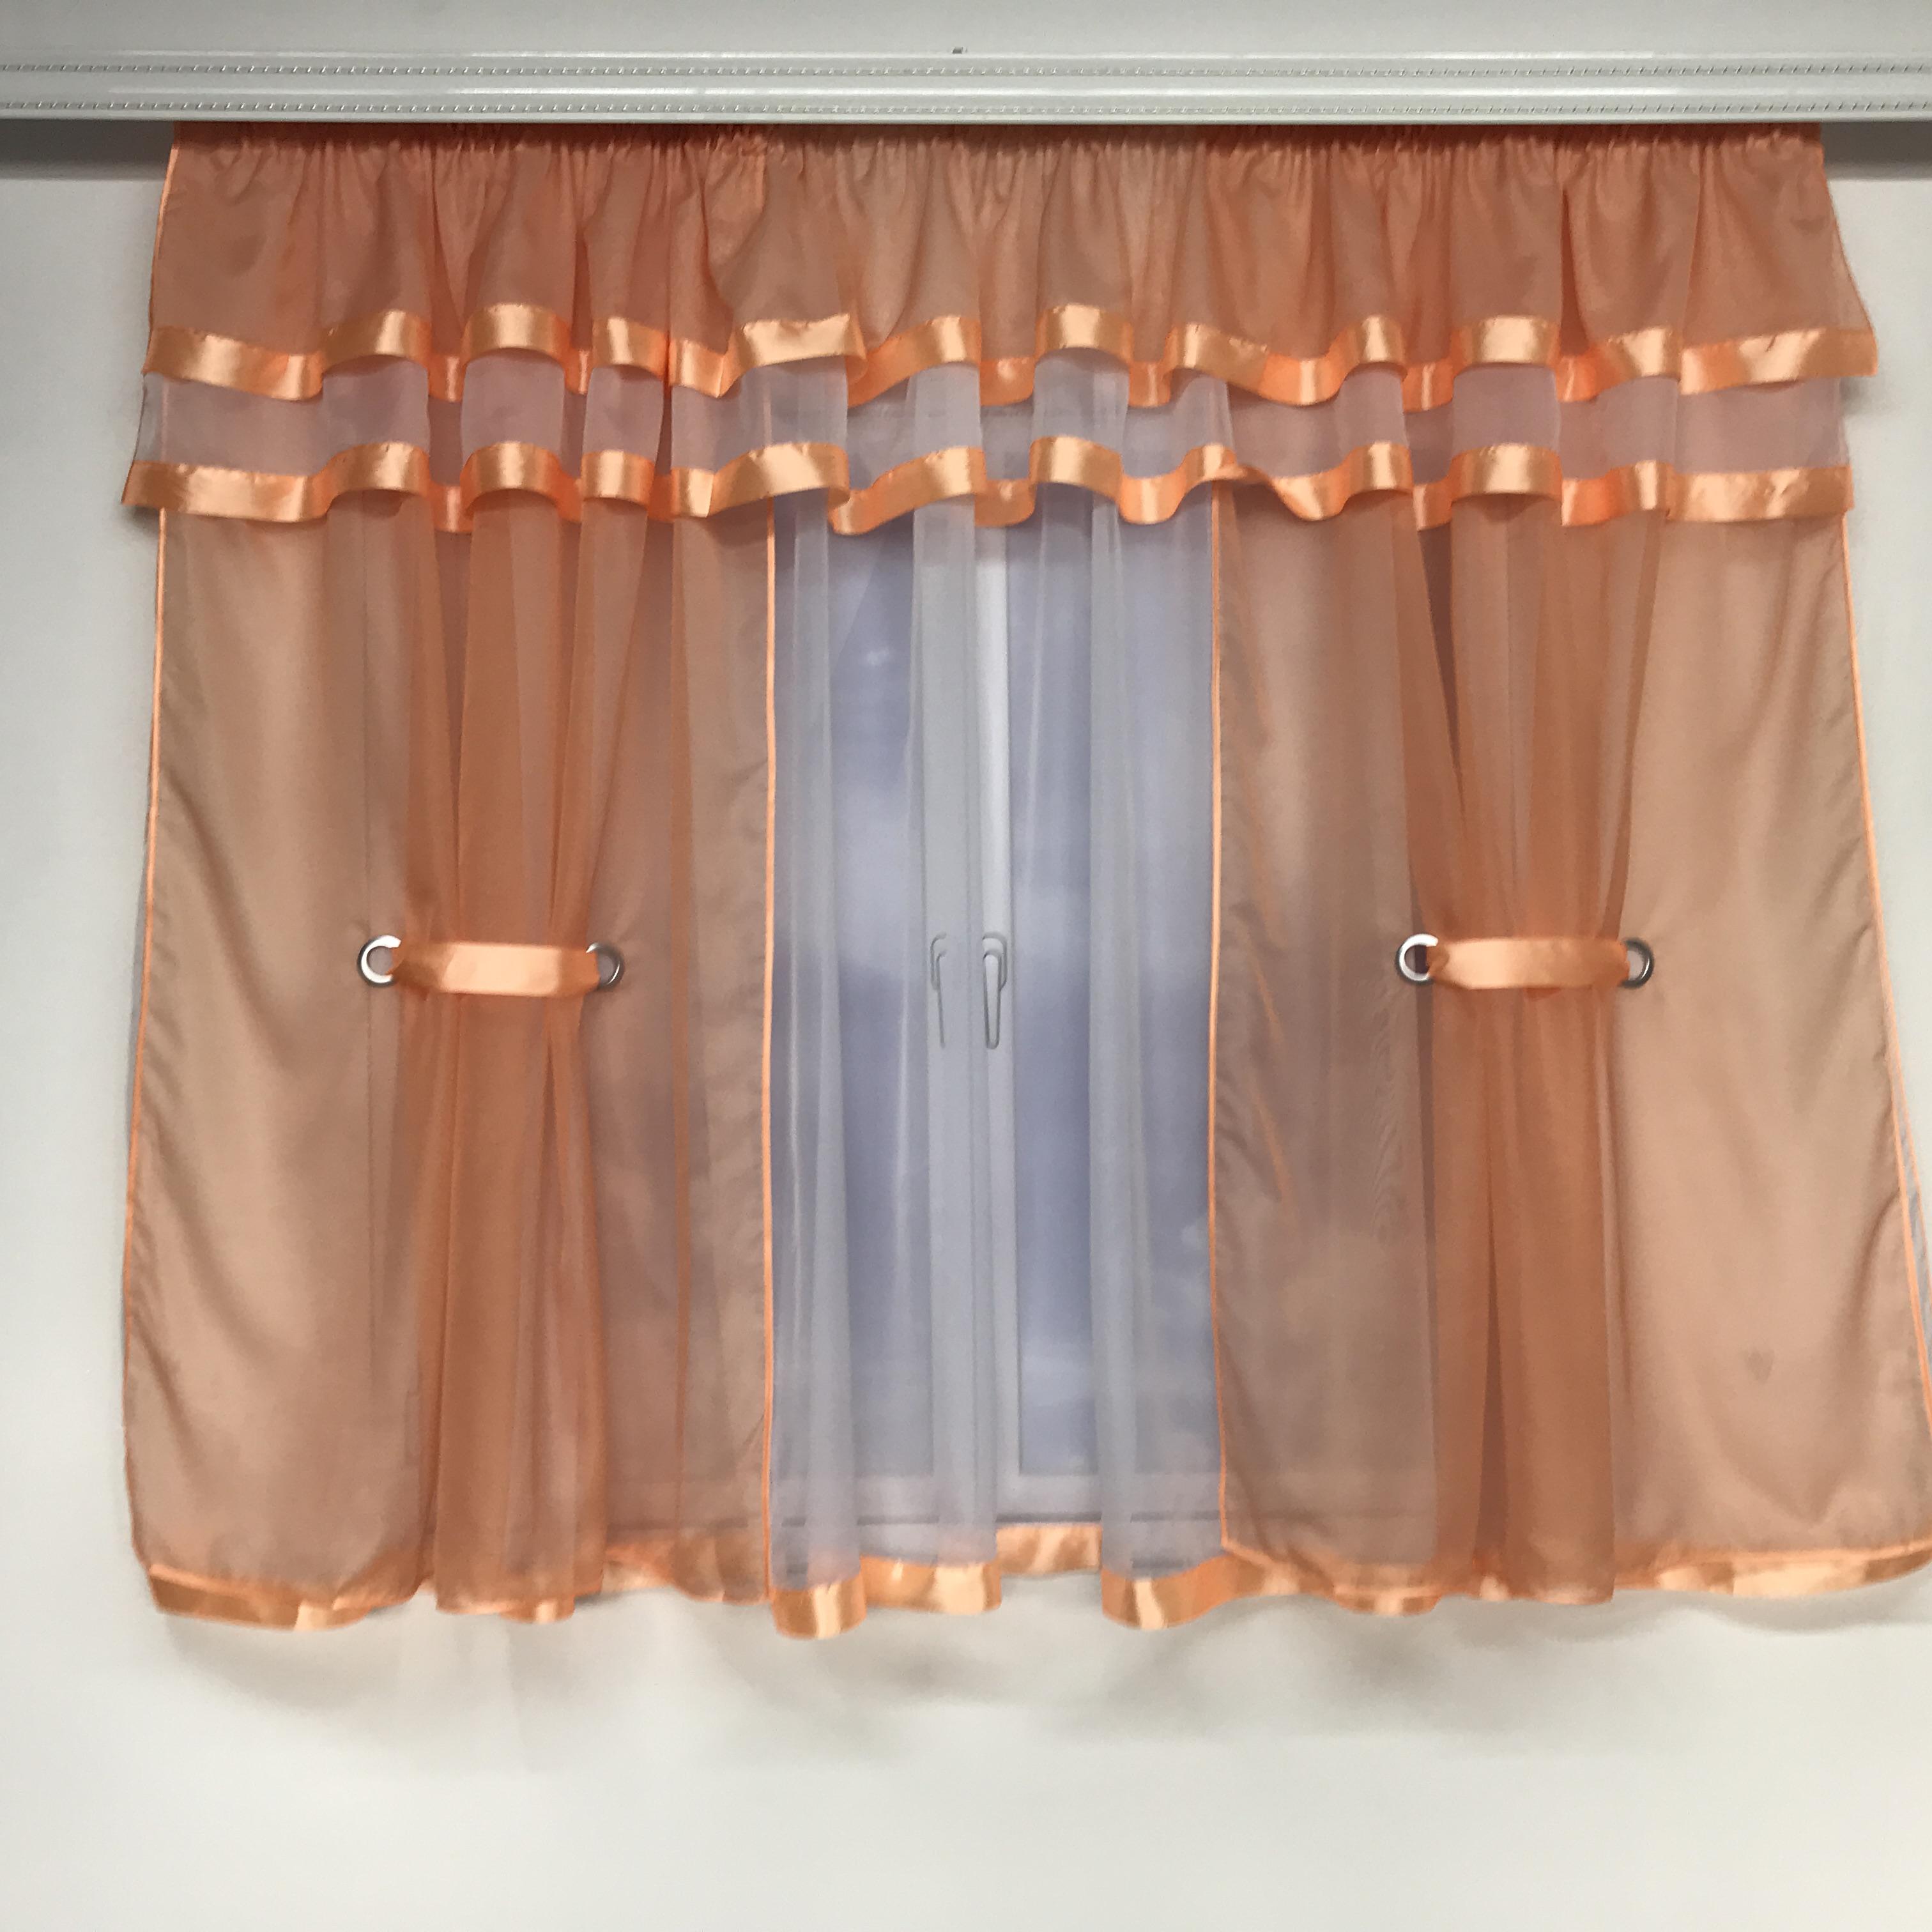 ALBO HOME TEXTILE Voile Rideau Jacquard Tulle Rideau Sheer Sheer Window Curtain Pour Salon Chambre ALBO 400x170 cm